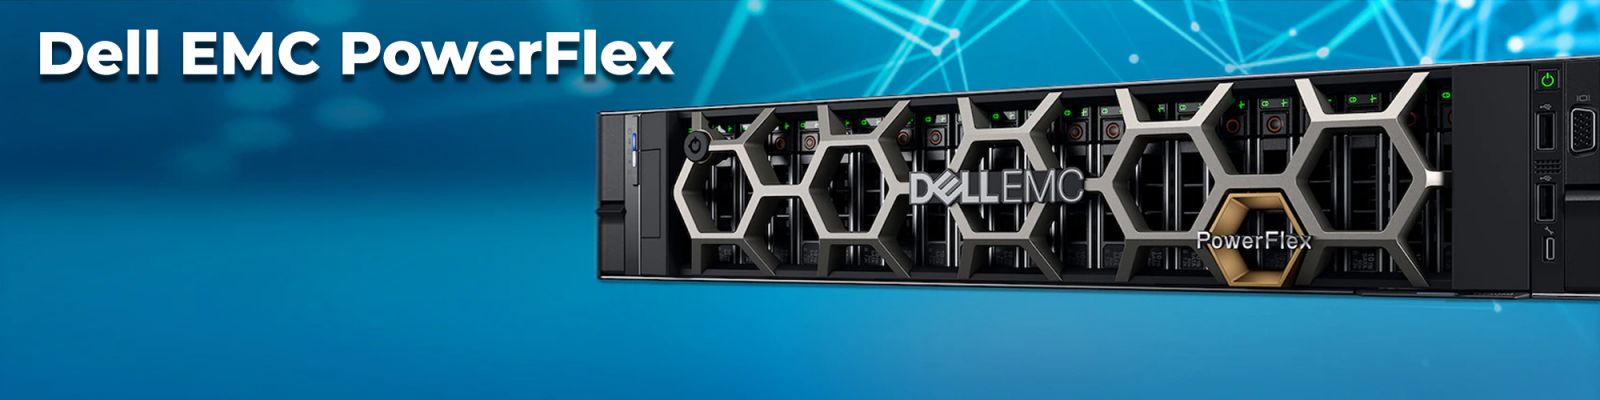 Dell-EMC-PowerFlex-banner-1-serverhub